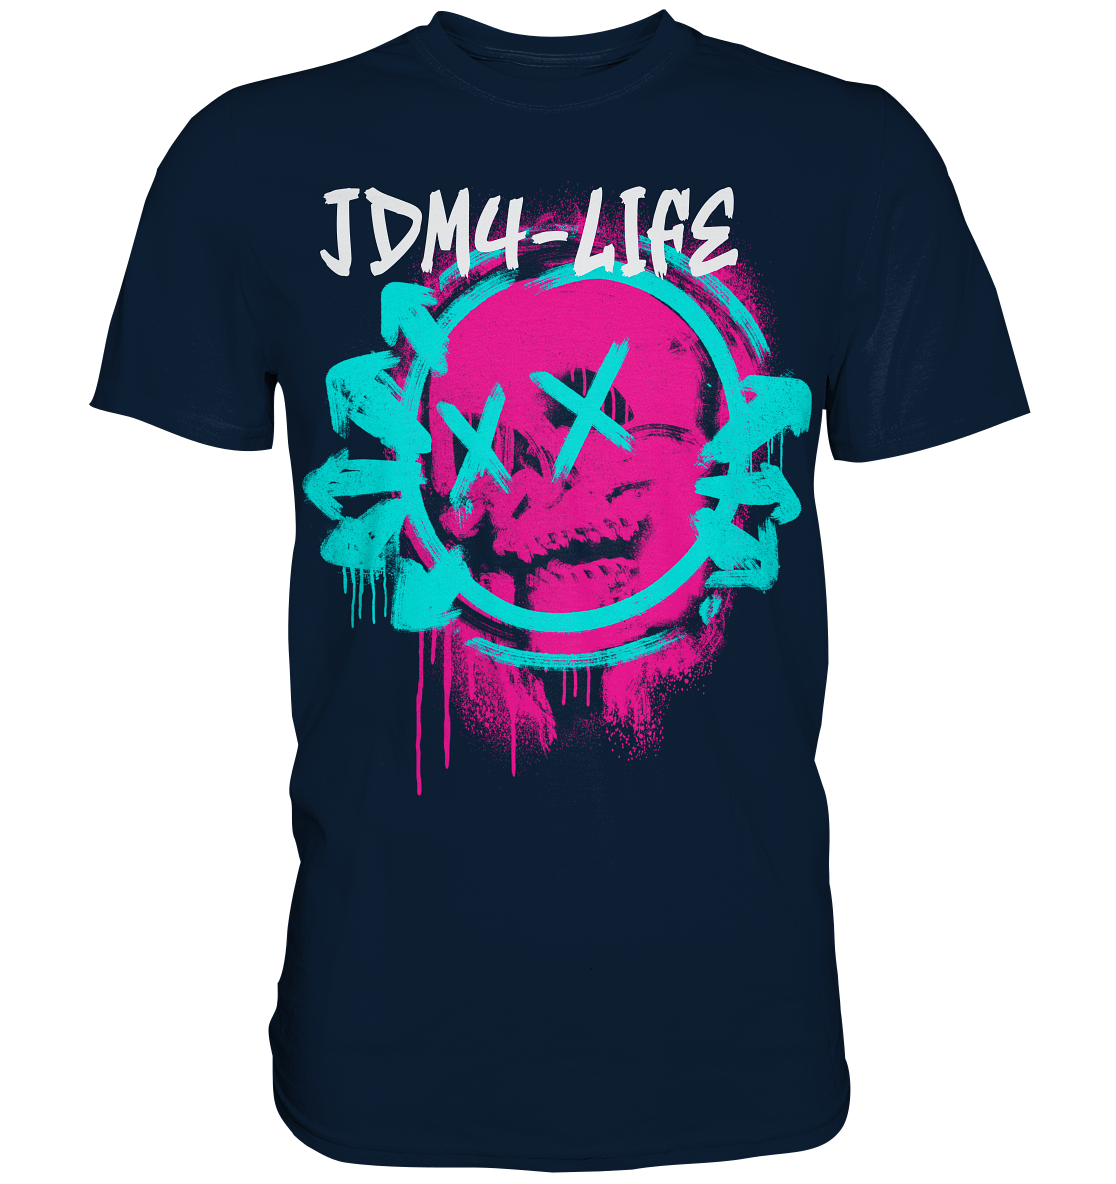 JDM4-LIFE Graffiti - Premium Shirt